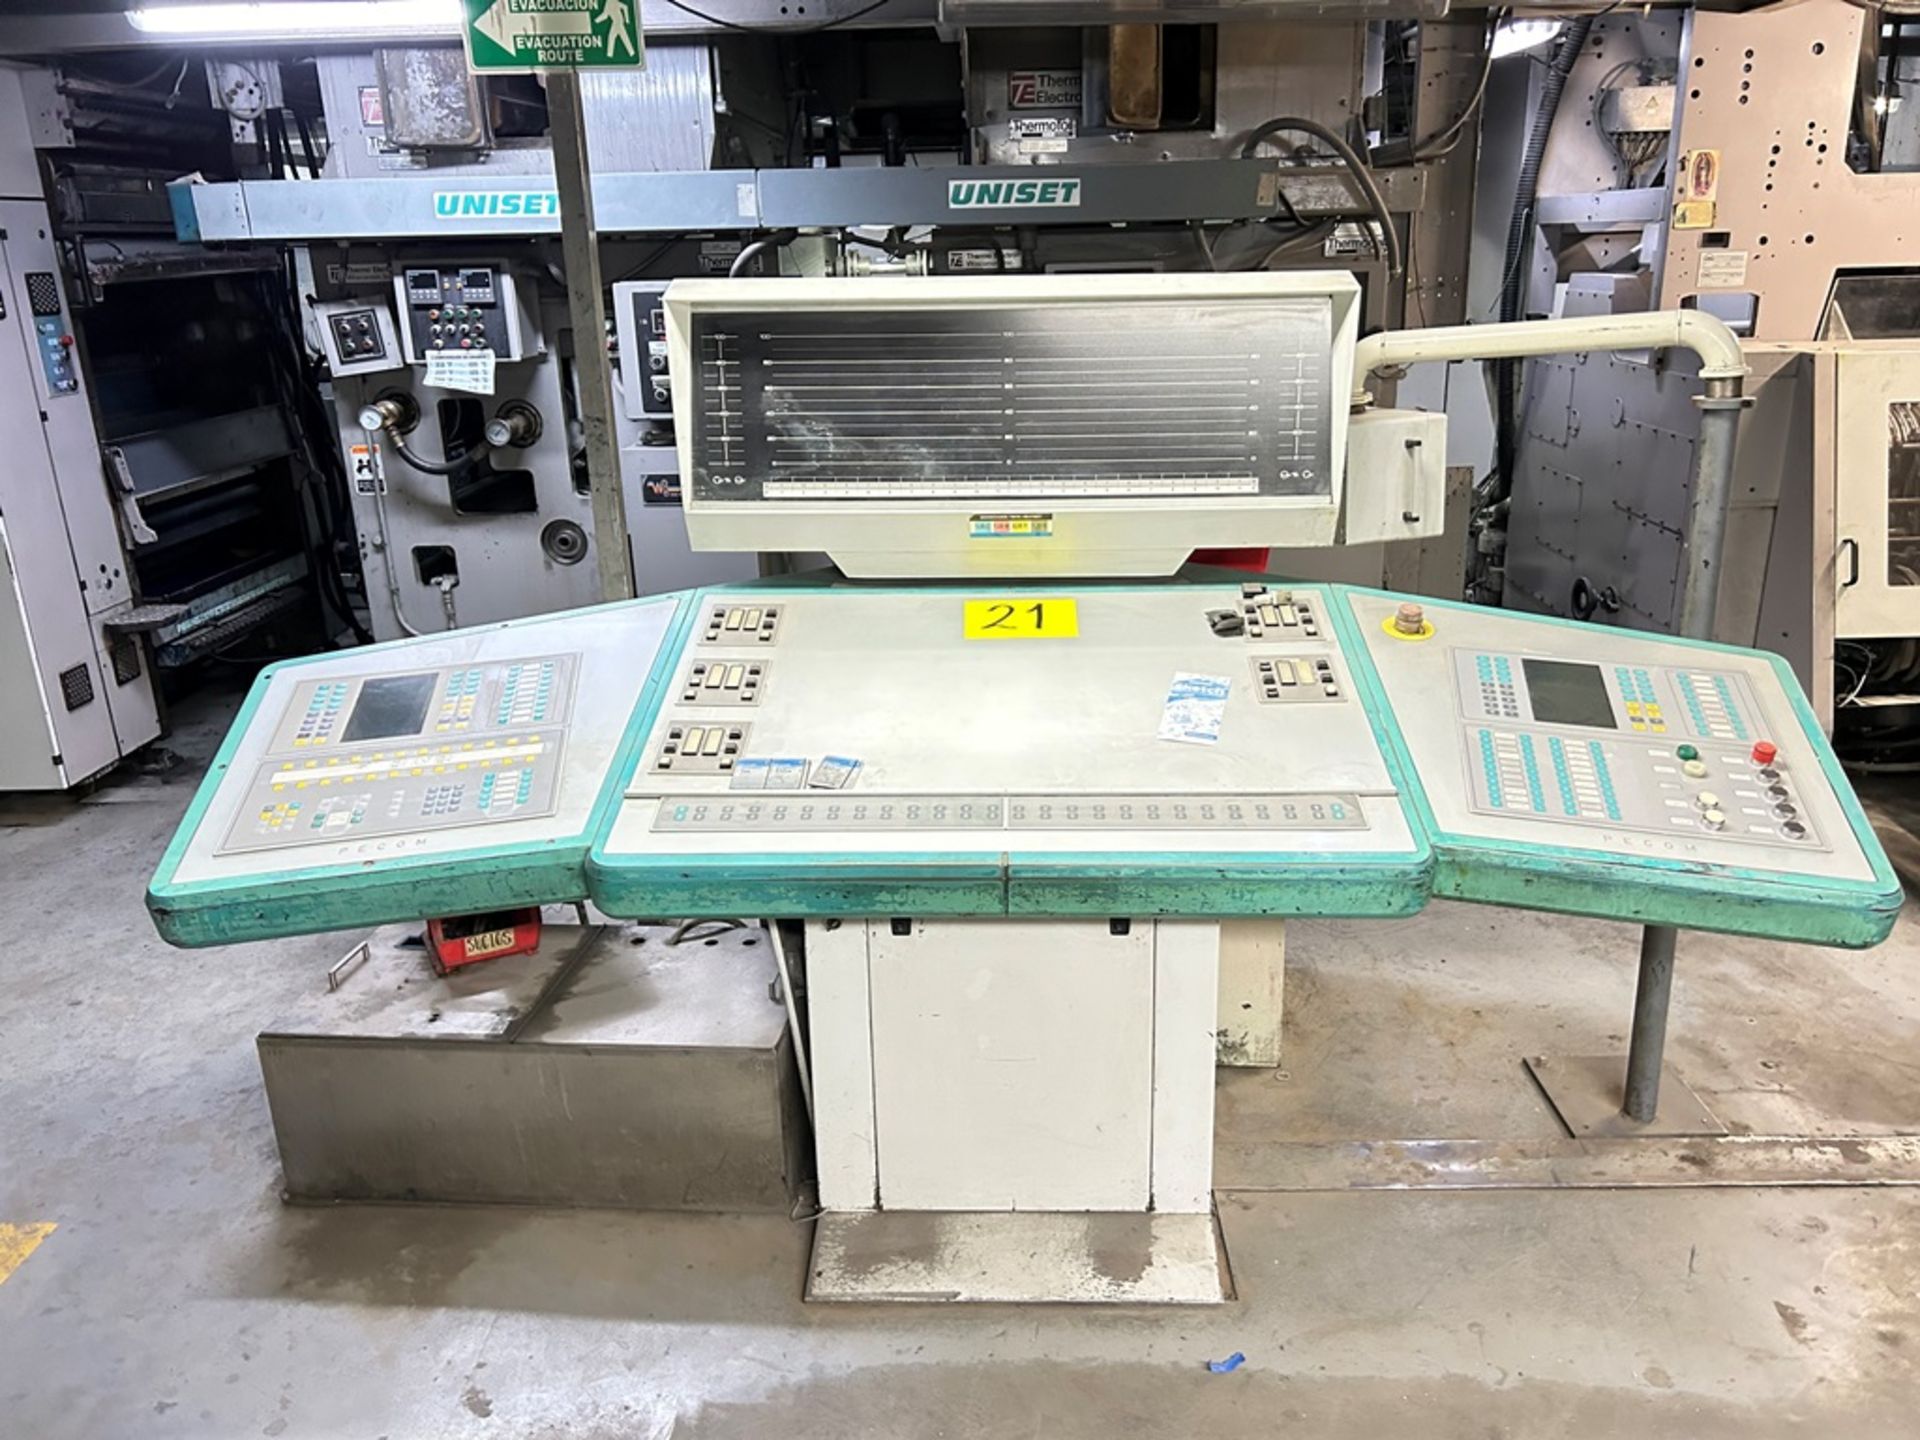 MAN ROLAND rotary printing machine, Model UNISET 60, Serial No. 11191, Year 2000, 400V, consisting - Image 31 of 37